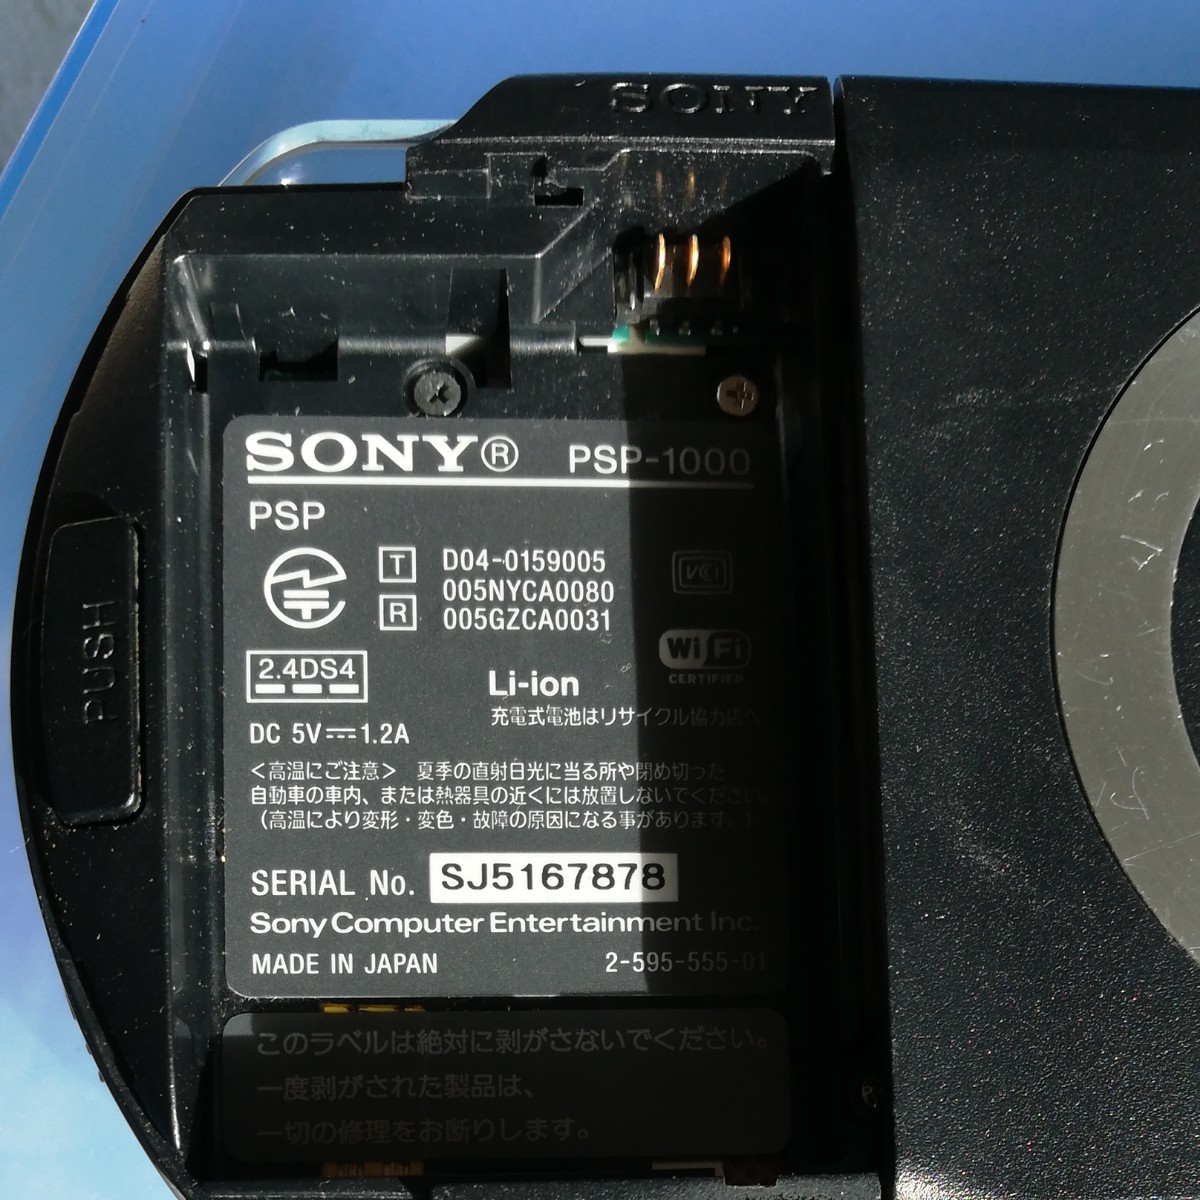 PSP-1000(バッテリー無し！)2Gメモリースティック、ケース！モンハン2ndGソフト付き！